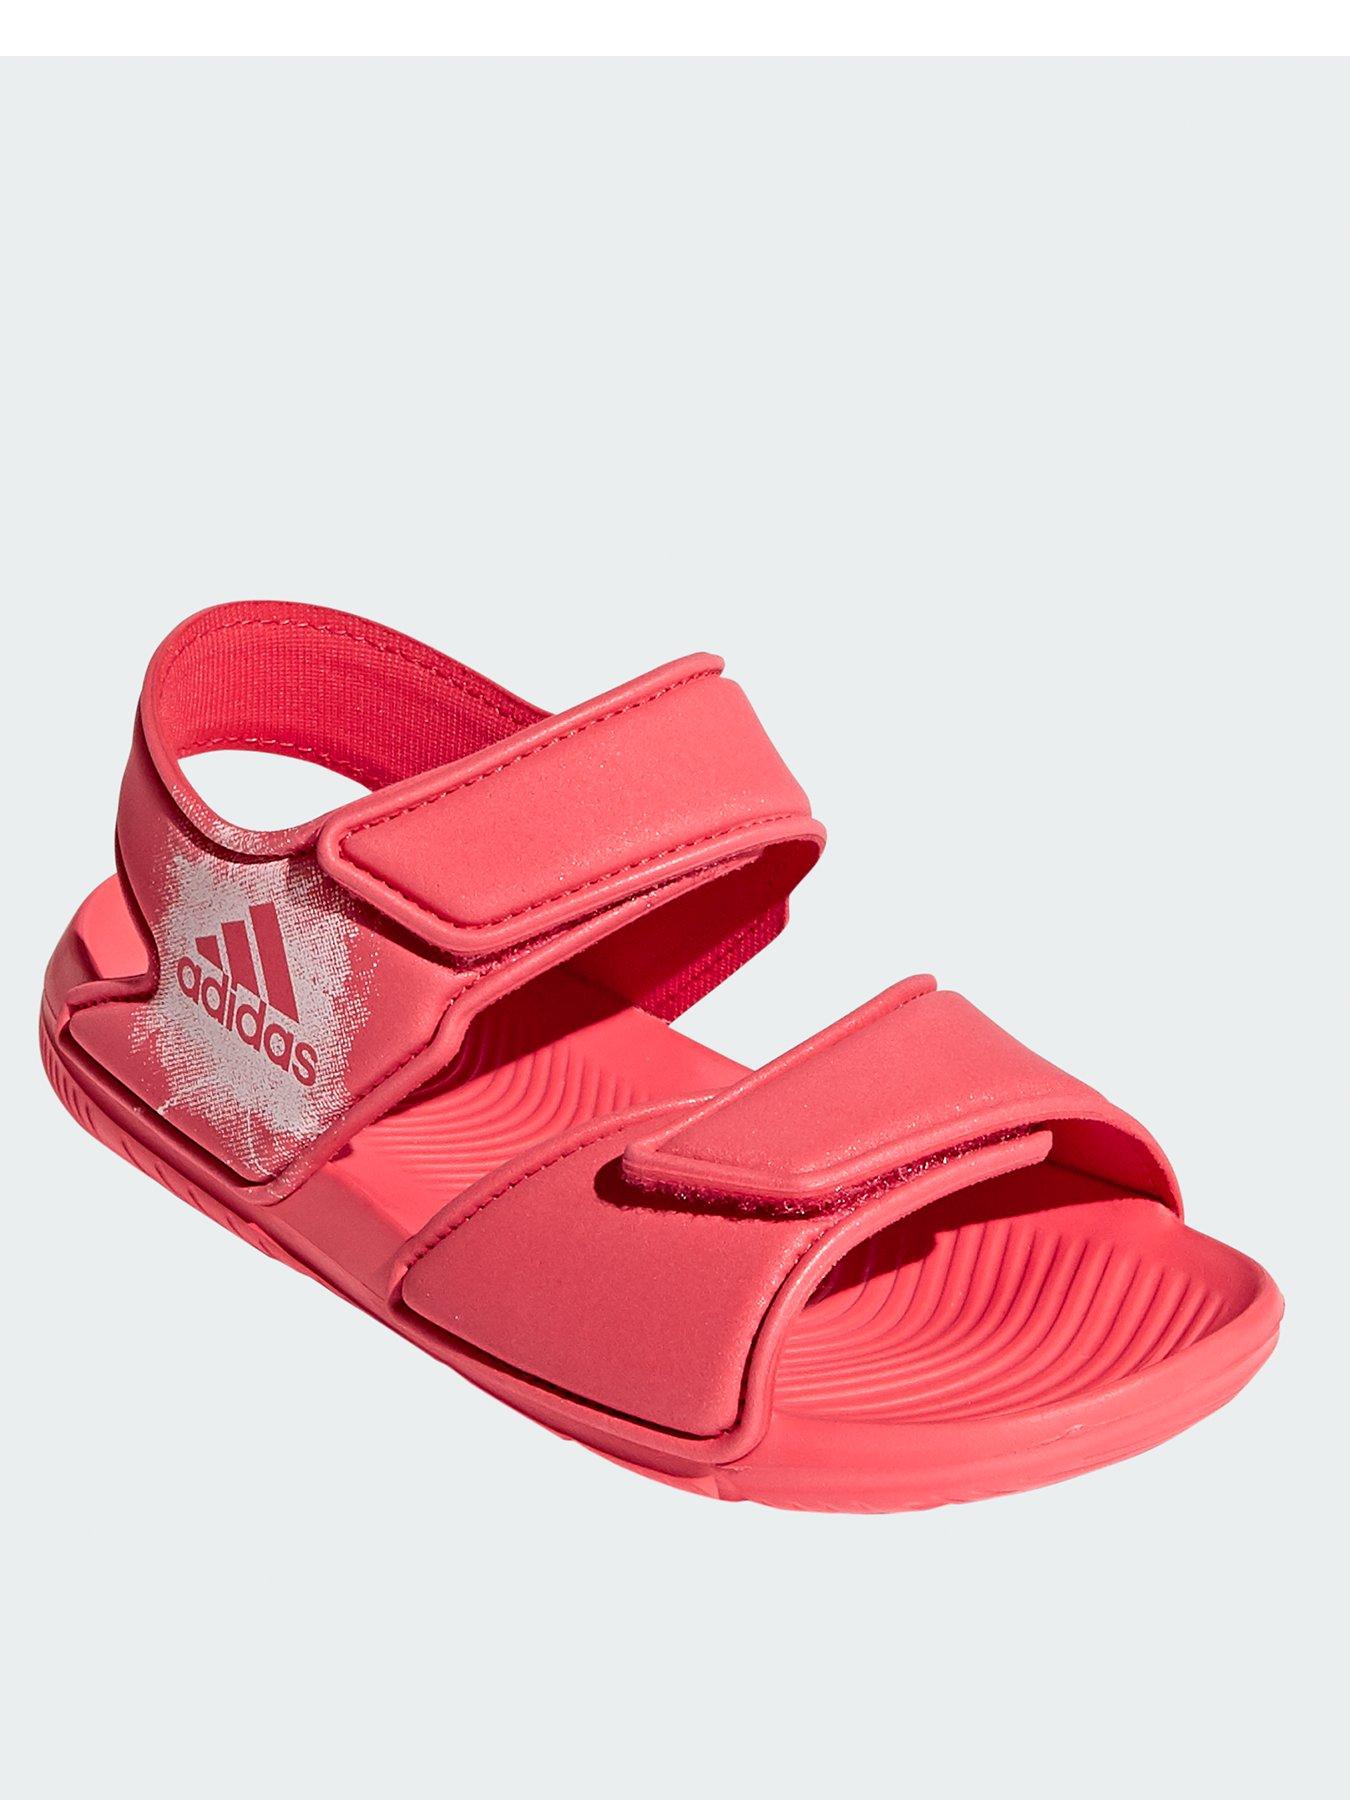 adidas girls sandals